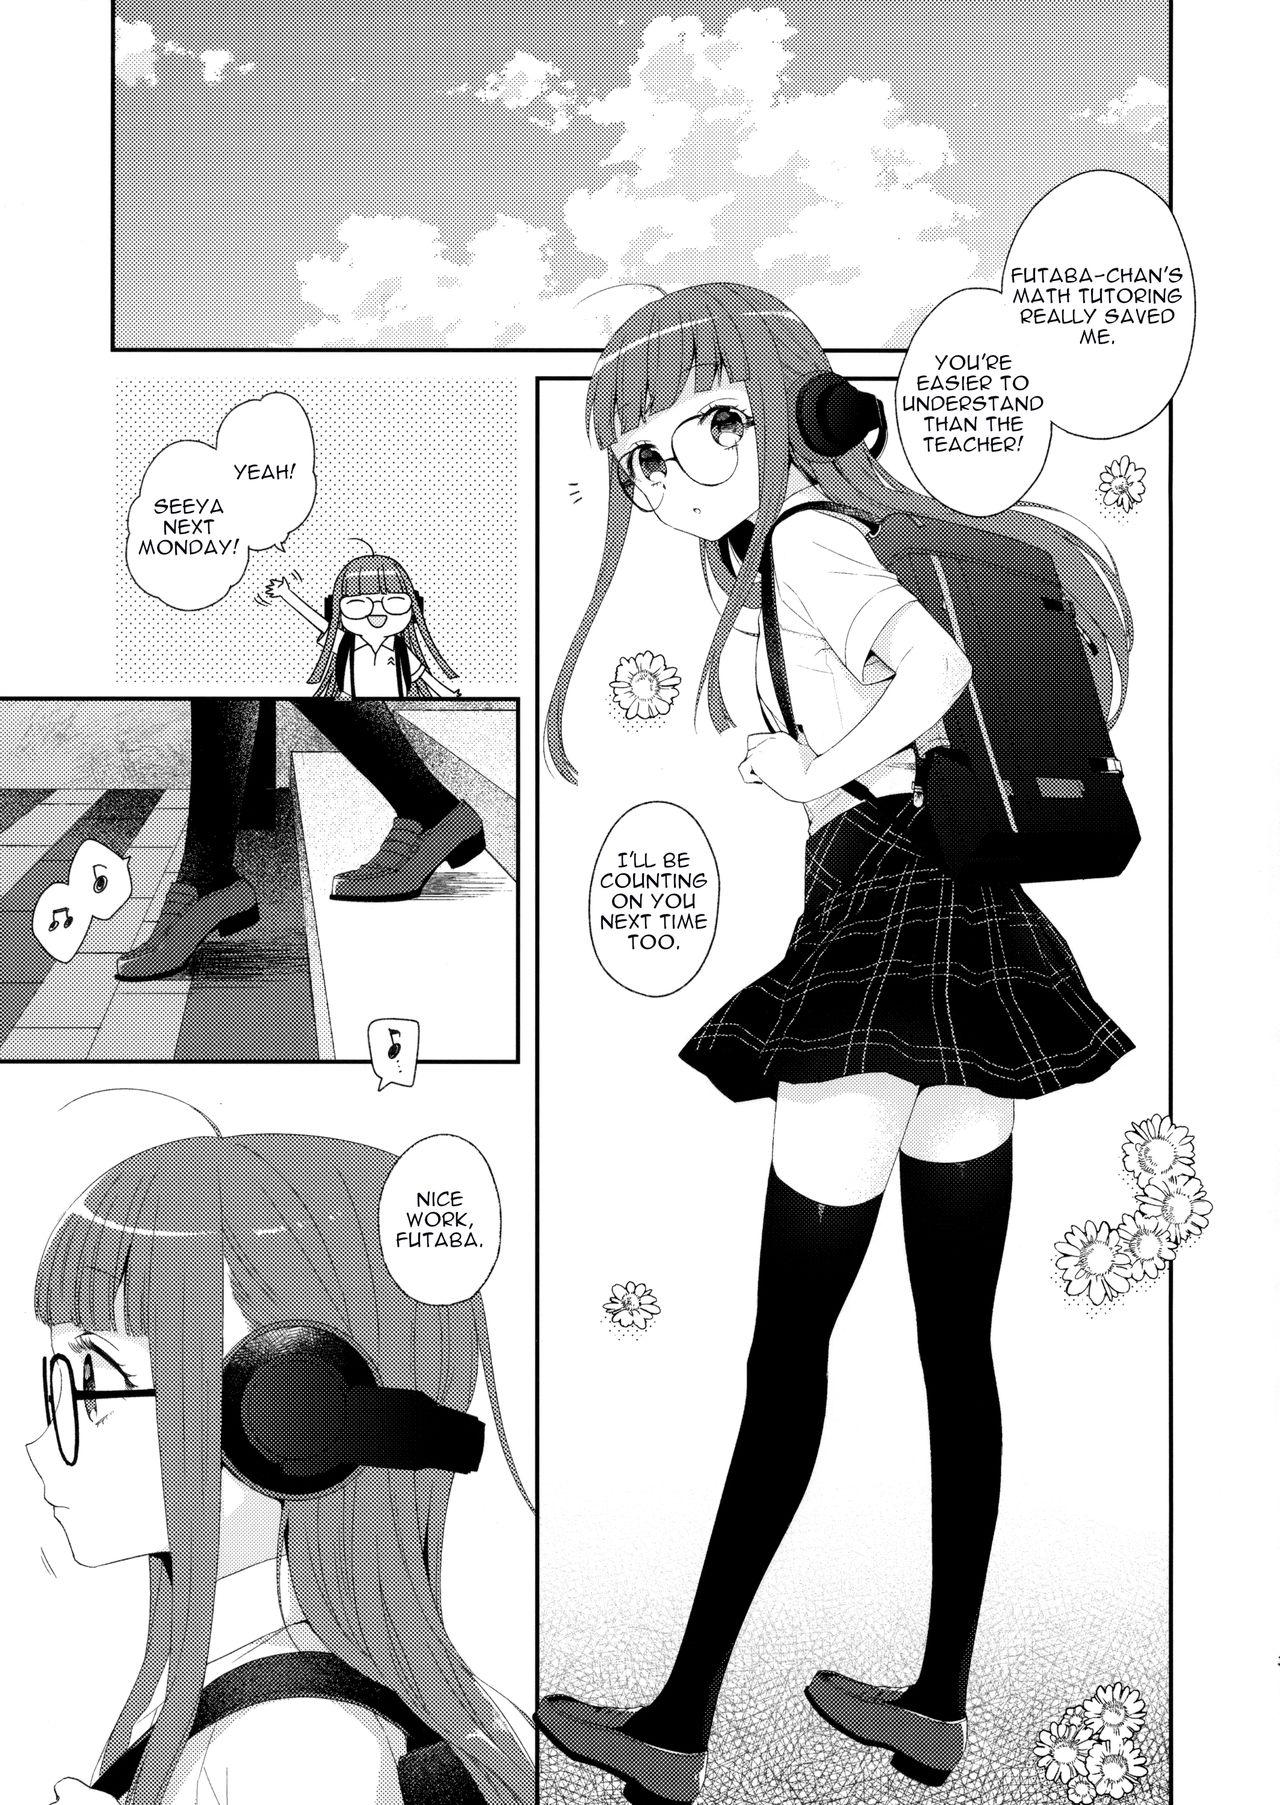 Nasty Yaneura@Afterschool - Persona 5 Uniform - Page 2